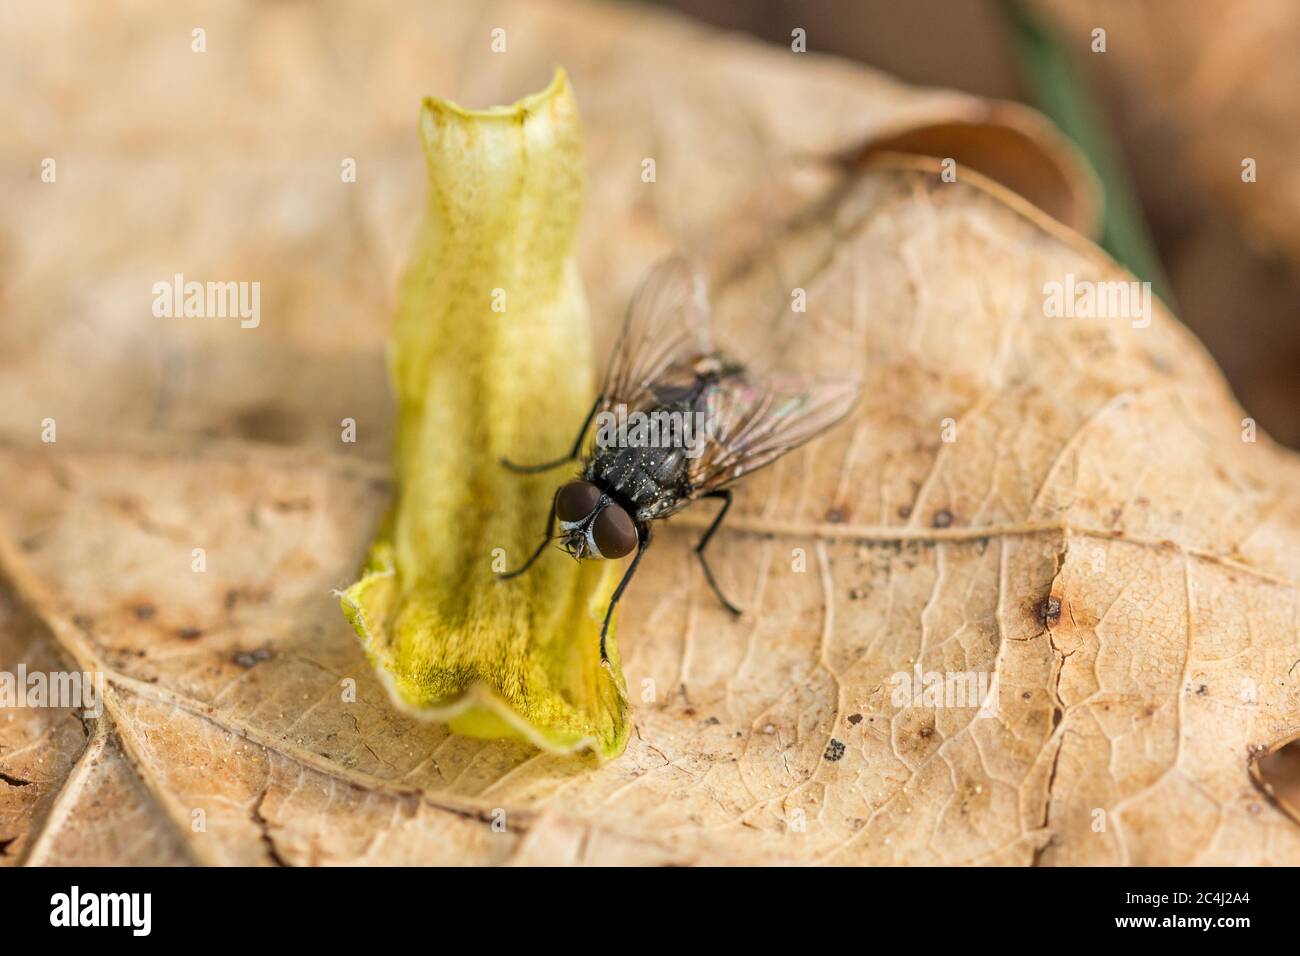 Macro closeup shot of a housefly sitting on a leaf Stock Photo